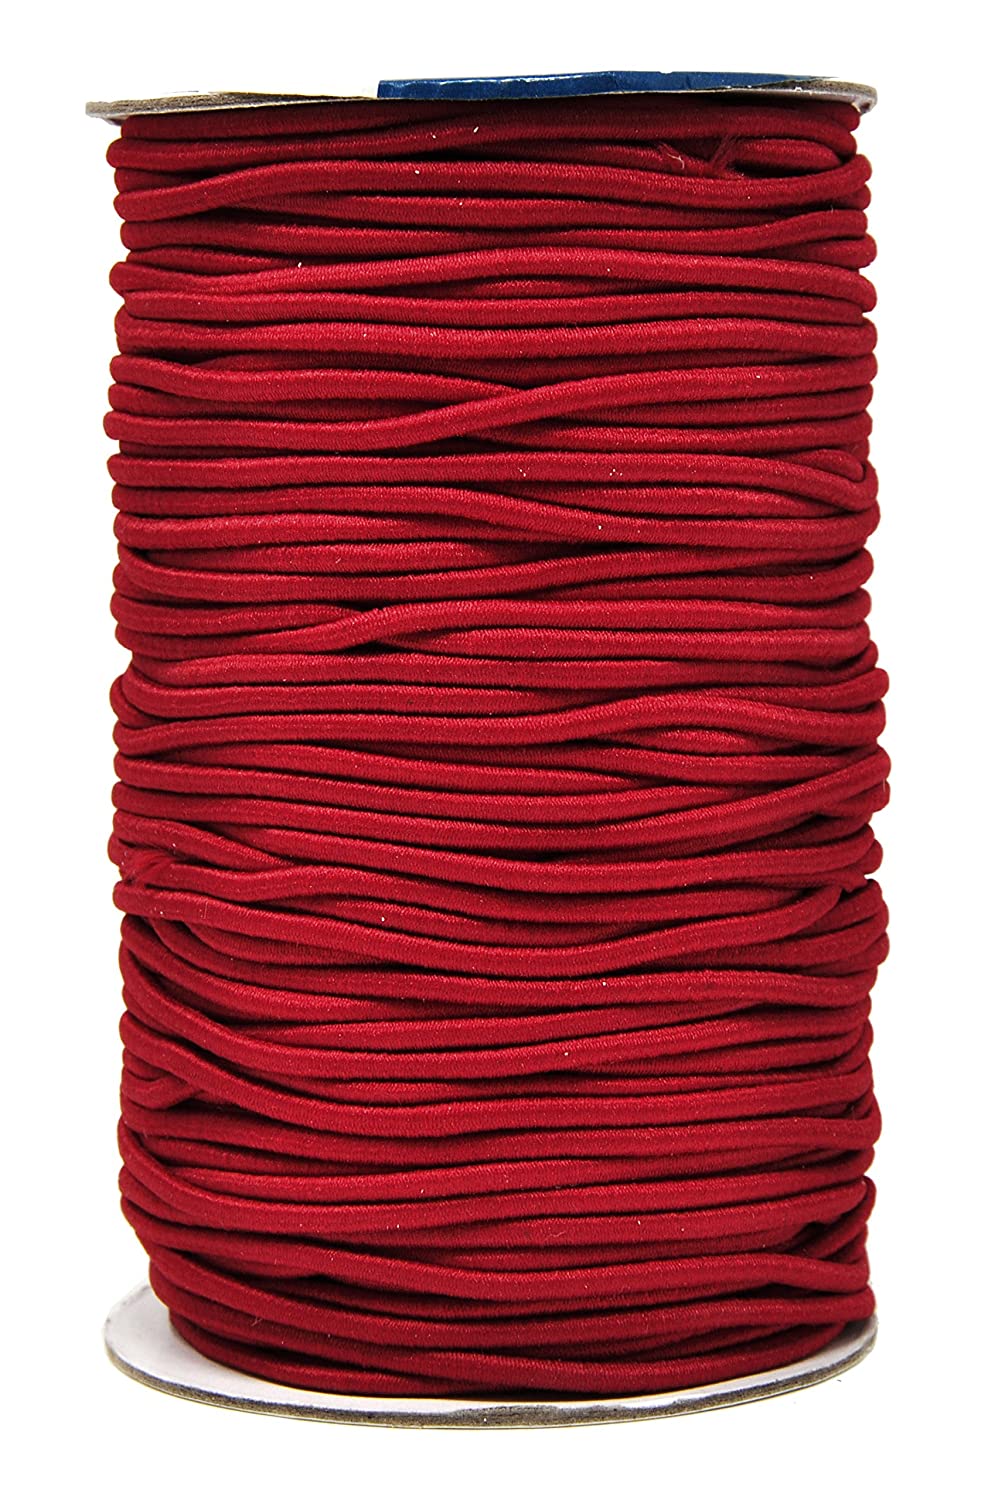 10Yds Orange Elastic Cord,4mm Round Elastic Cord,stretch cord,Stretch  Drawstring,Elastic Rope Craft DIY,Nylon wrapped Rubber.